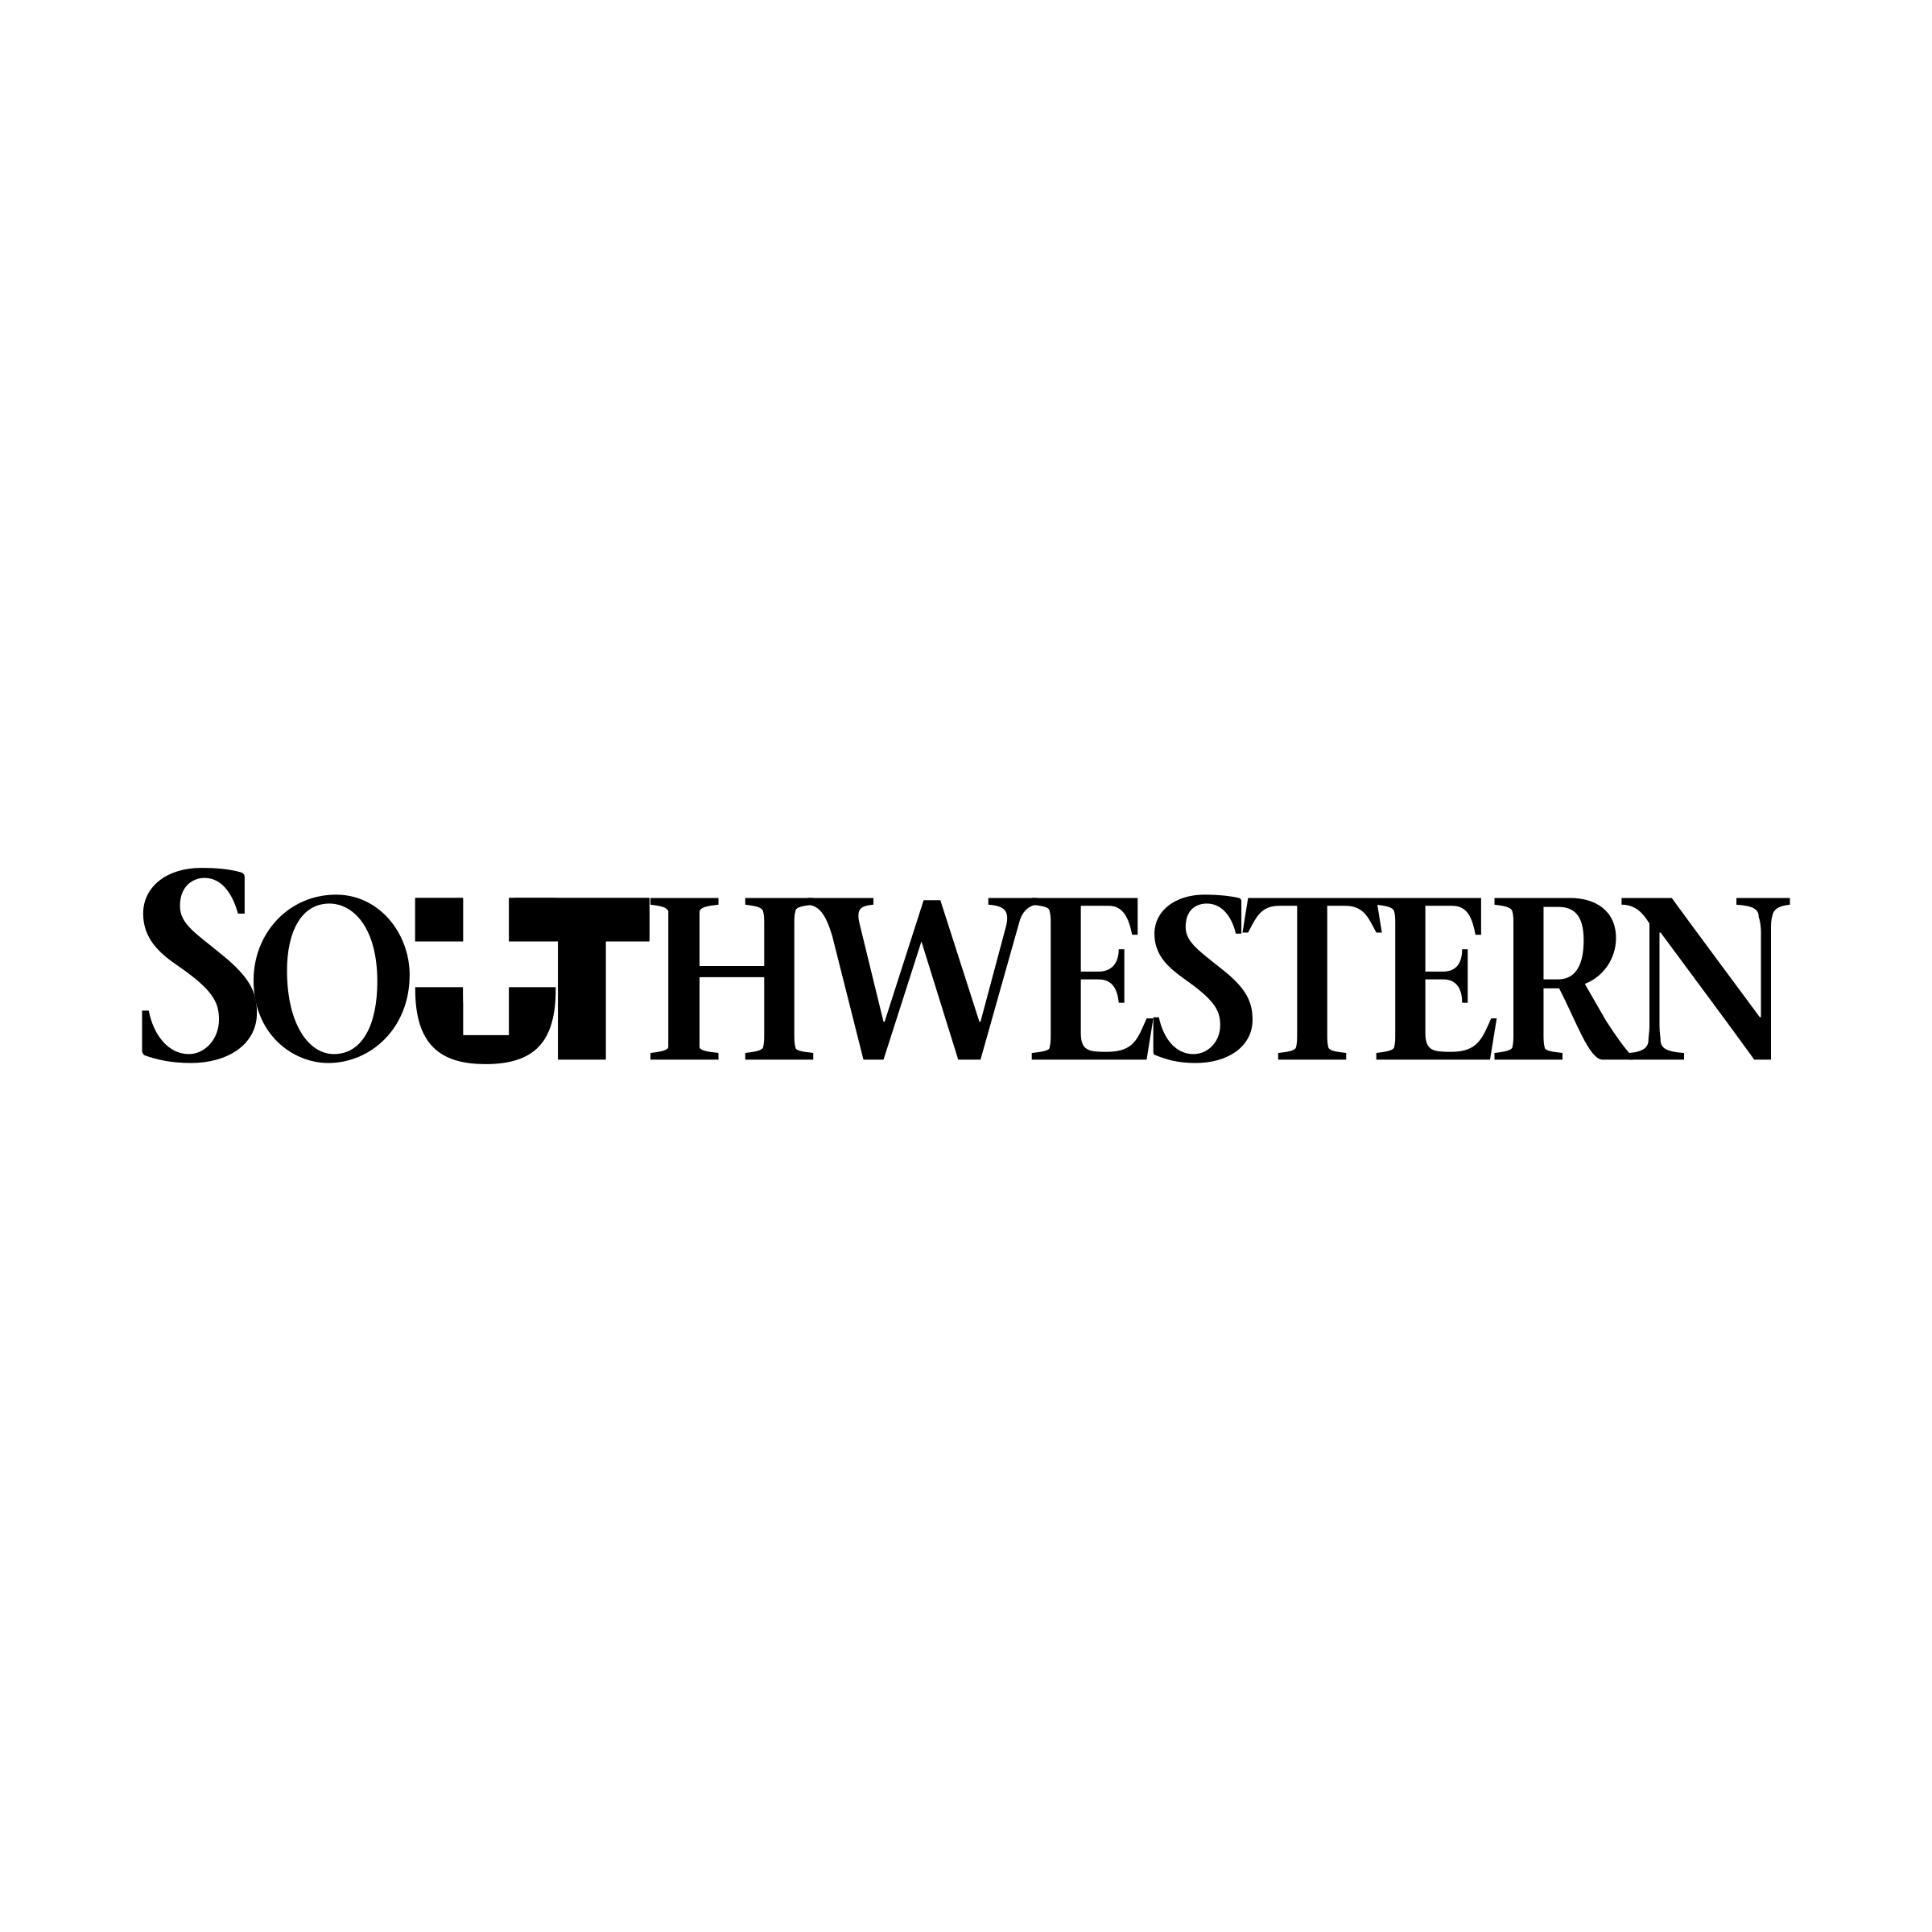 Southwestern Logo - Southwestern Logo PNG Transparent & SVG Vector - Freebie Supply